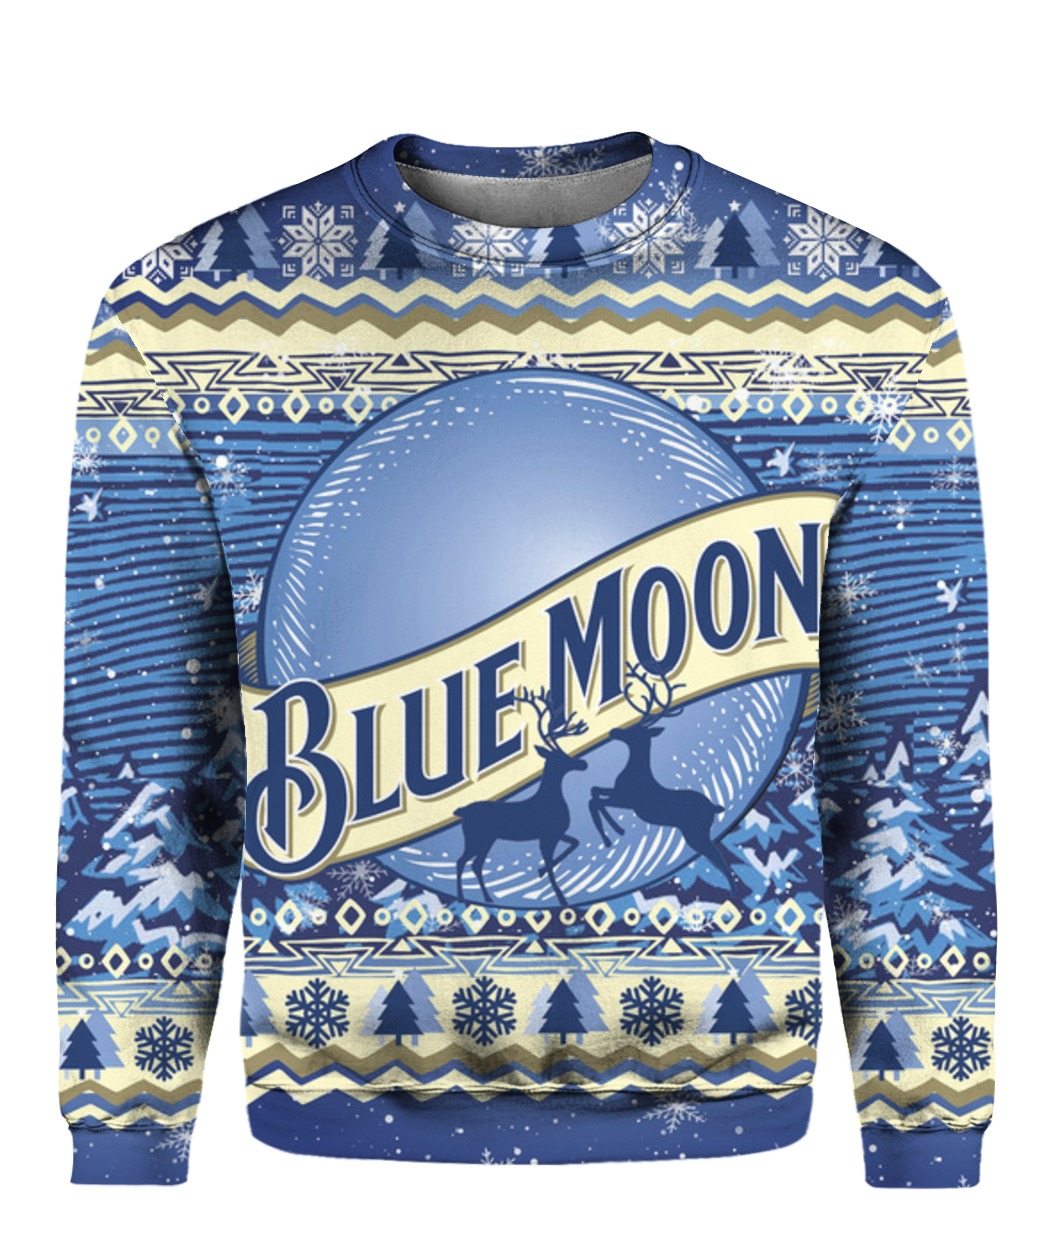 Blue moon beer bottle full printing ugly christmas sweater 1